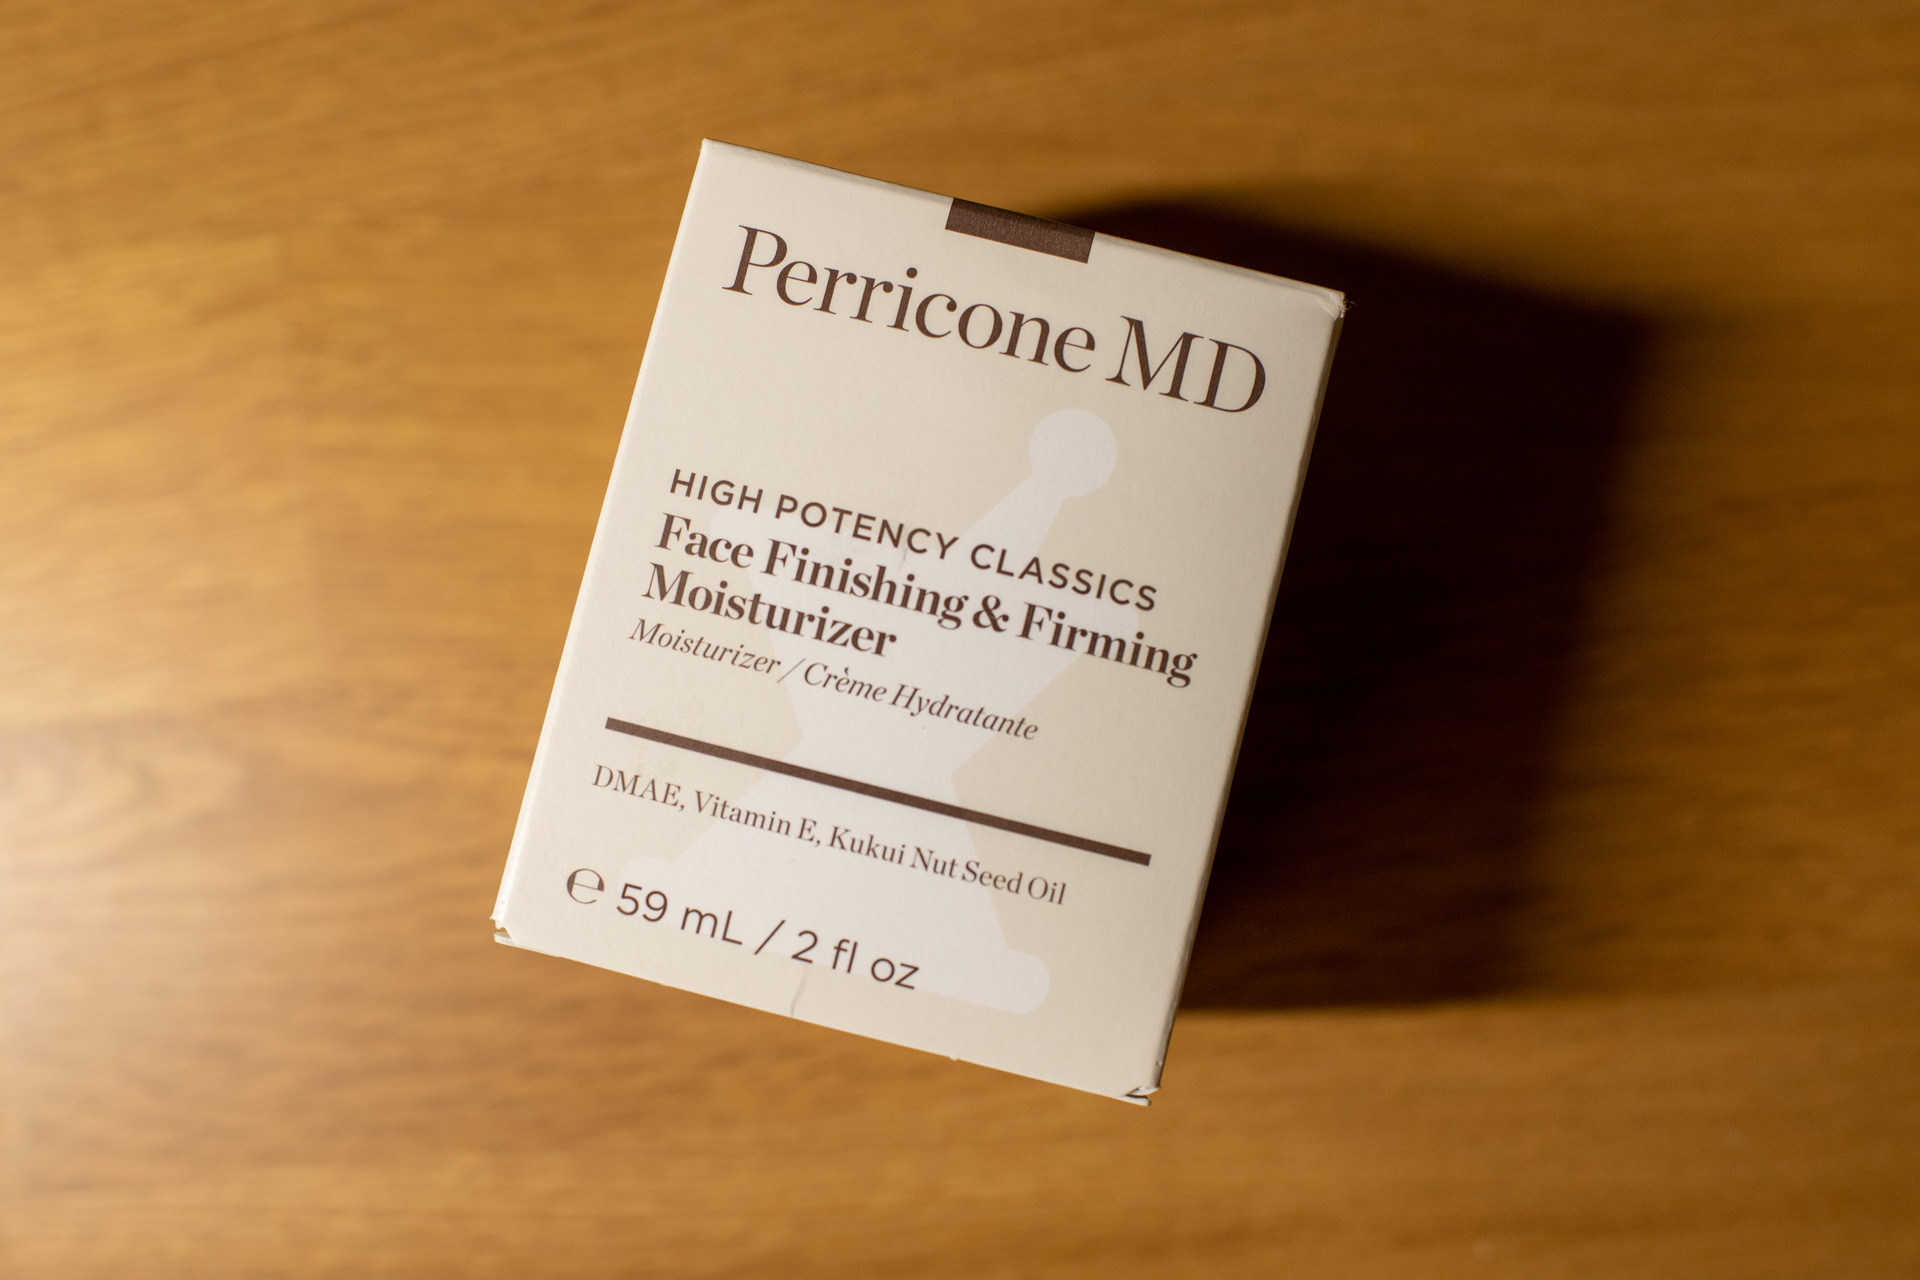 Perricone MD High Potency Classics Face Finishing & Firming Moisturiser 59mlを個人輸入して思ったこと